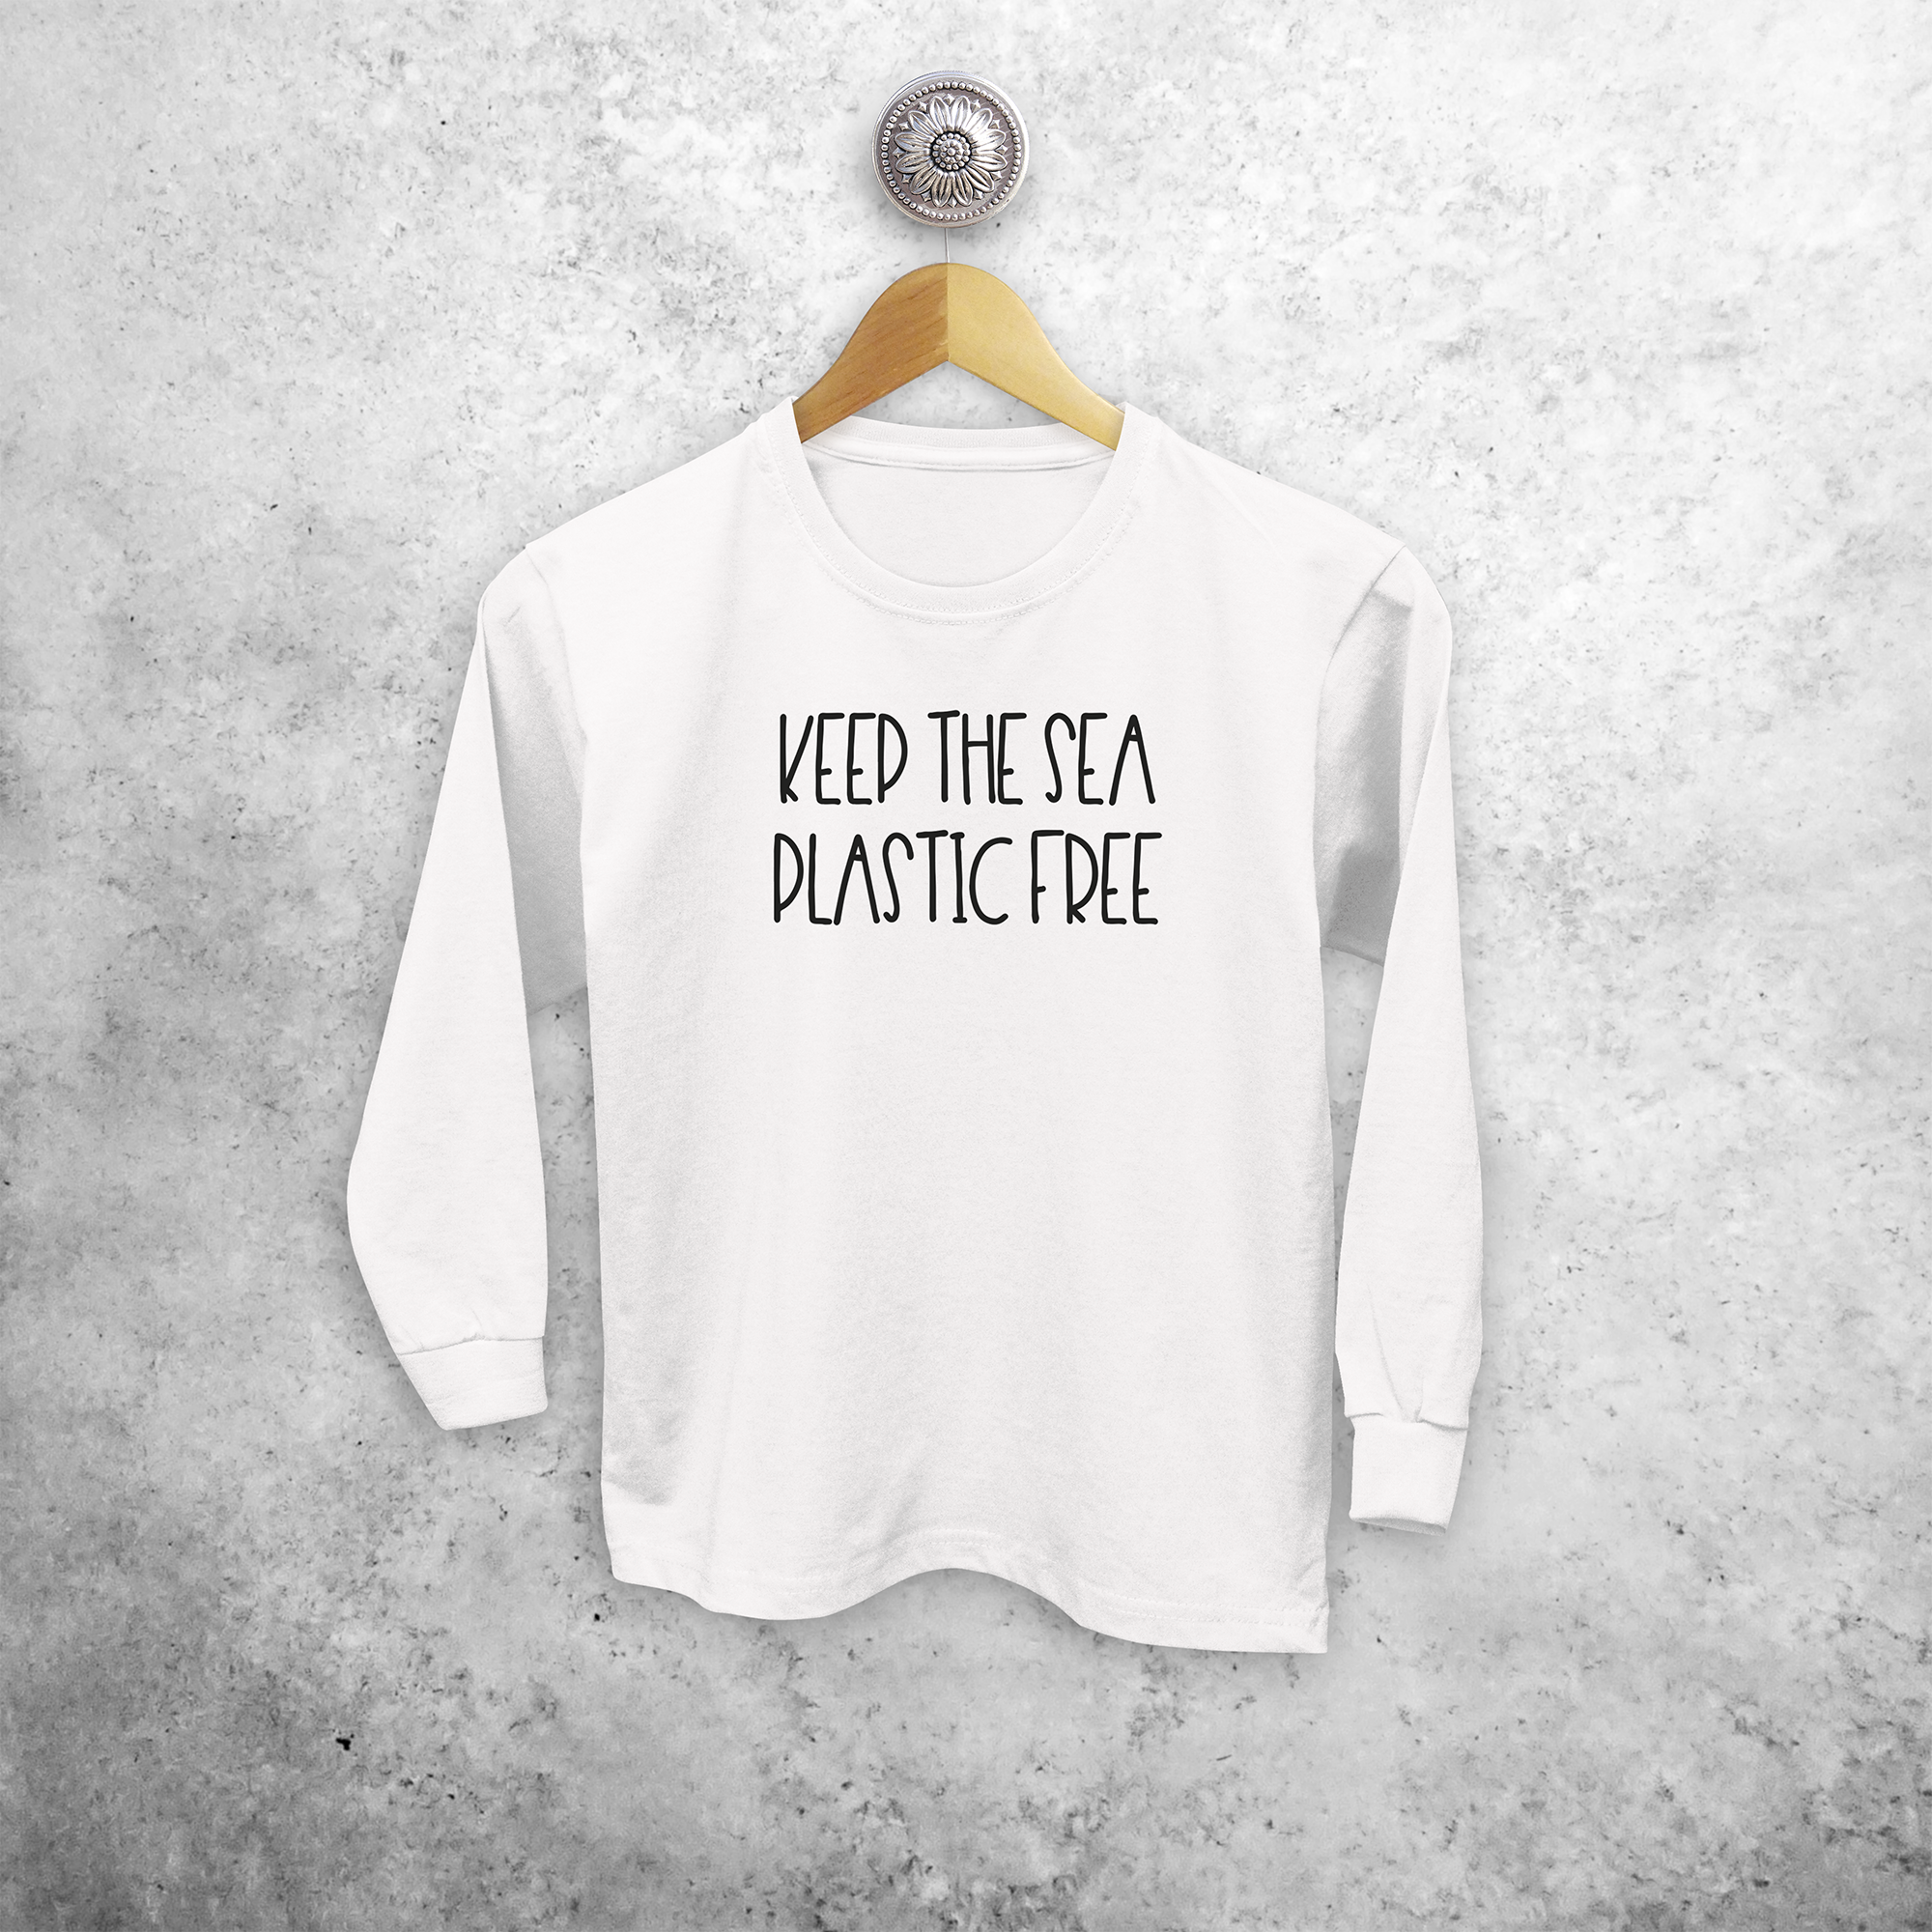 'Keep the sea plastic free' kids longsleeve shirt